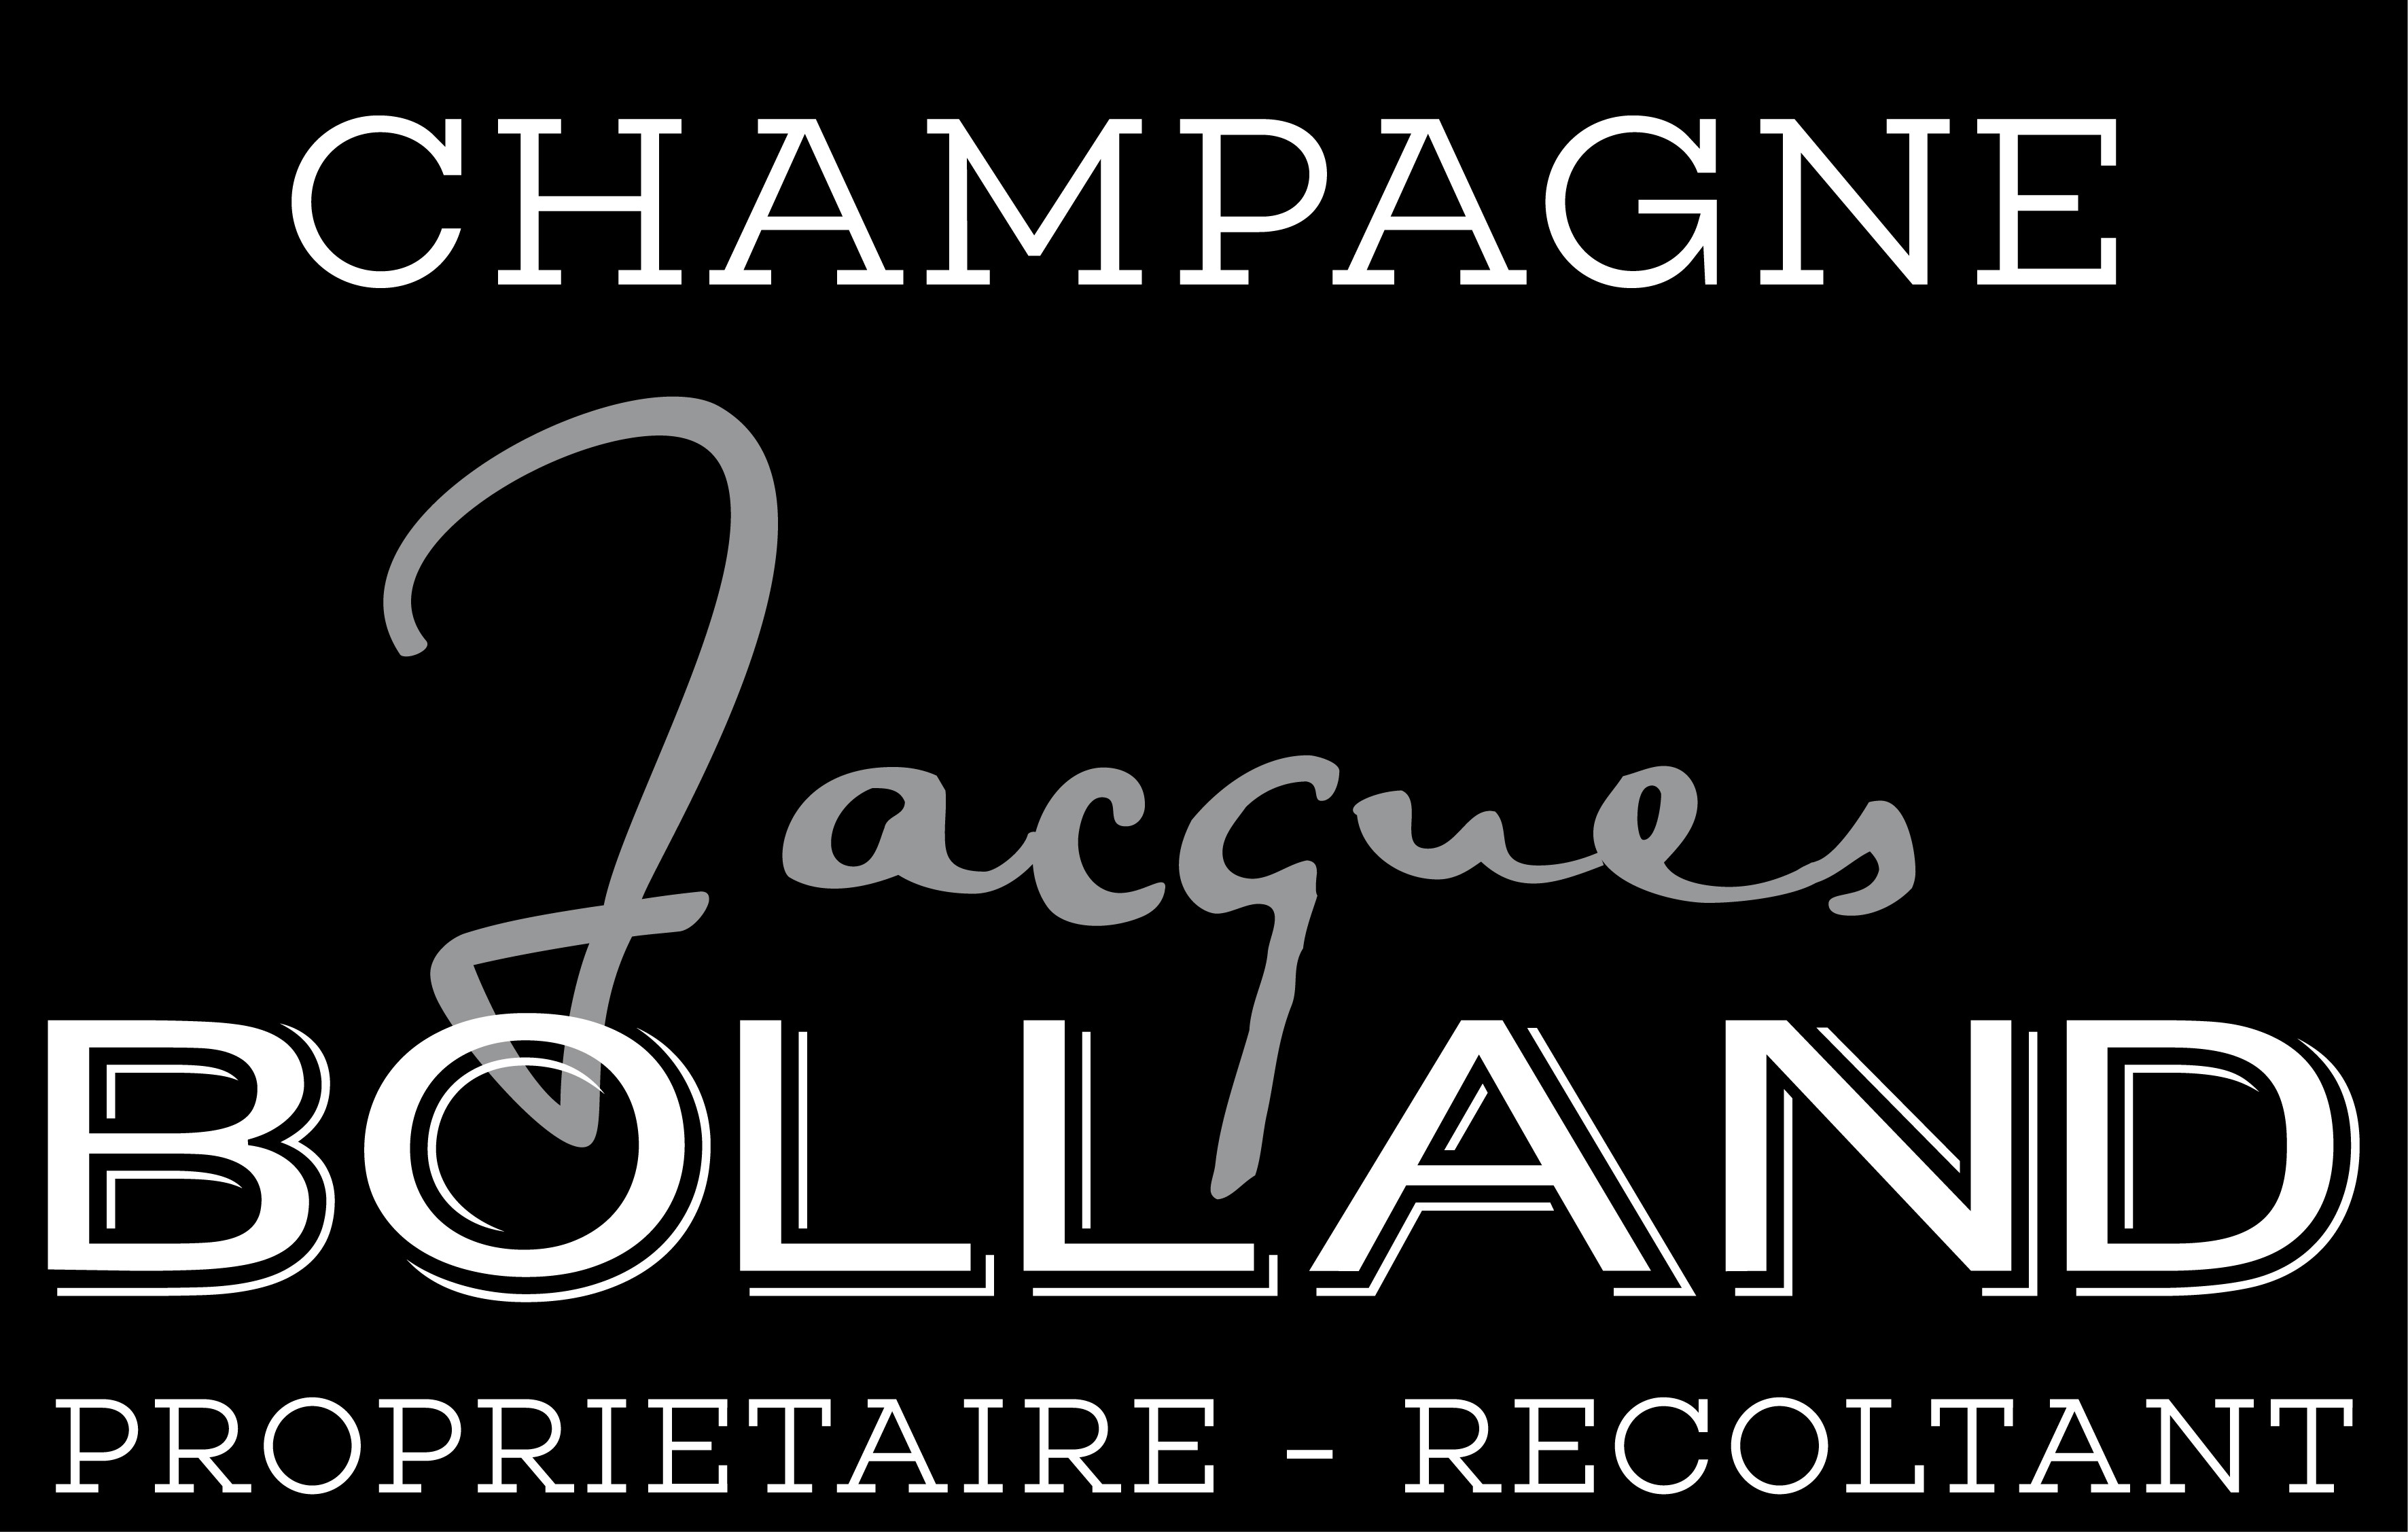 Champagne Bolland